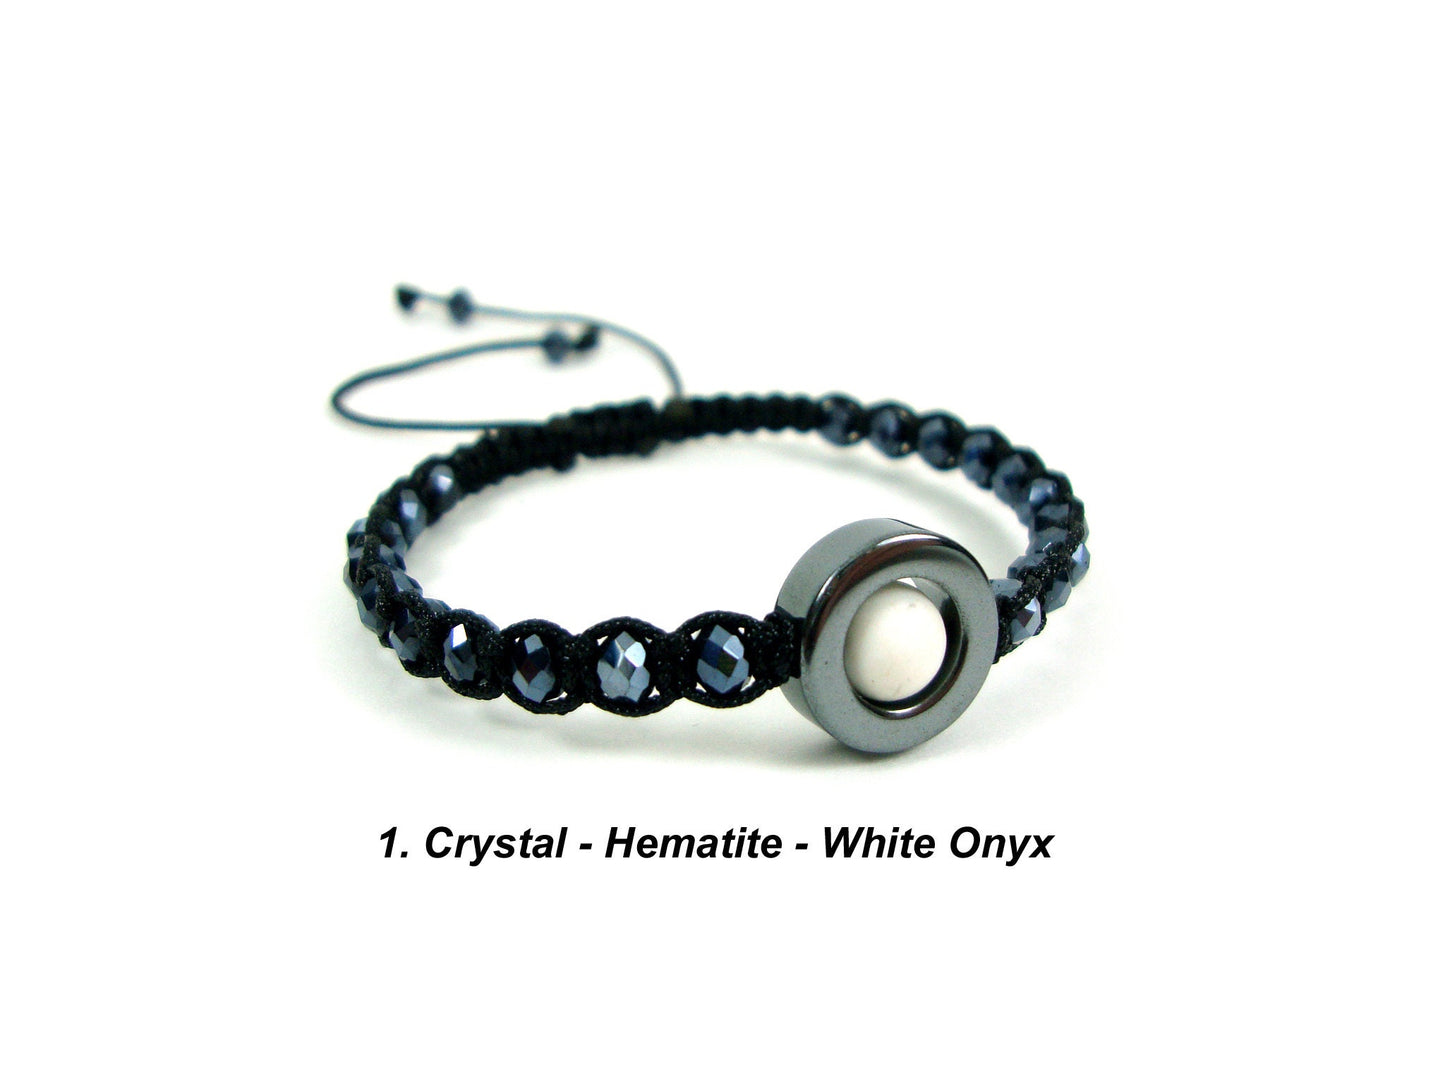 Trendy Modern Macrame Adjustable Bracelets With Swarovski Crystals And Natural Stones